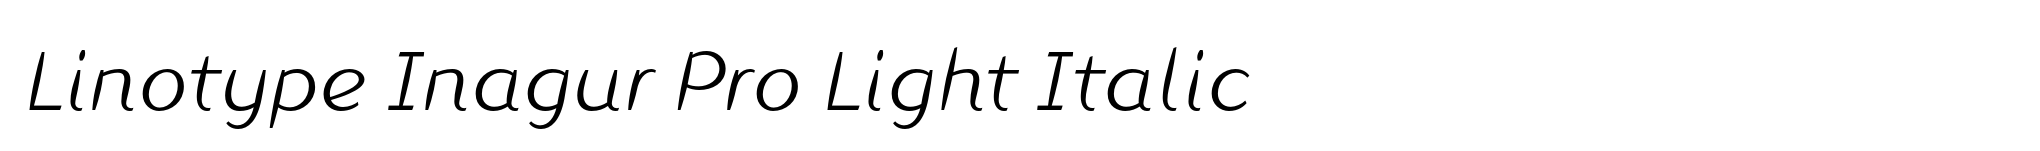 Linotype Inagur Pro Light Italic image